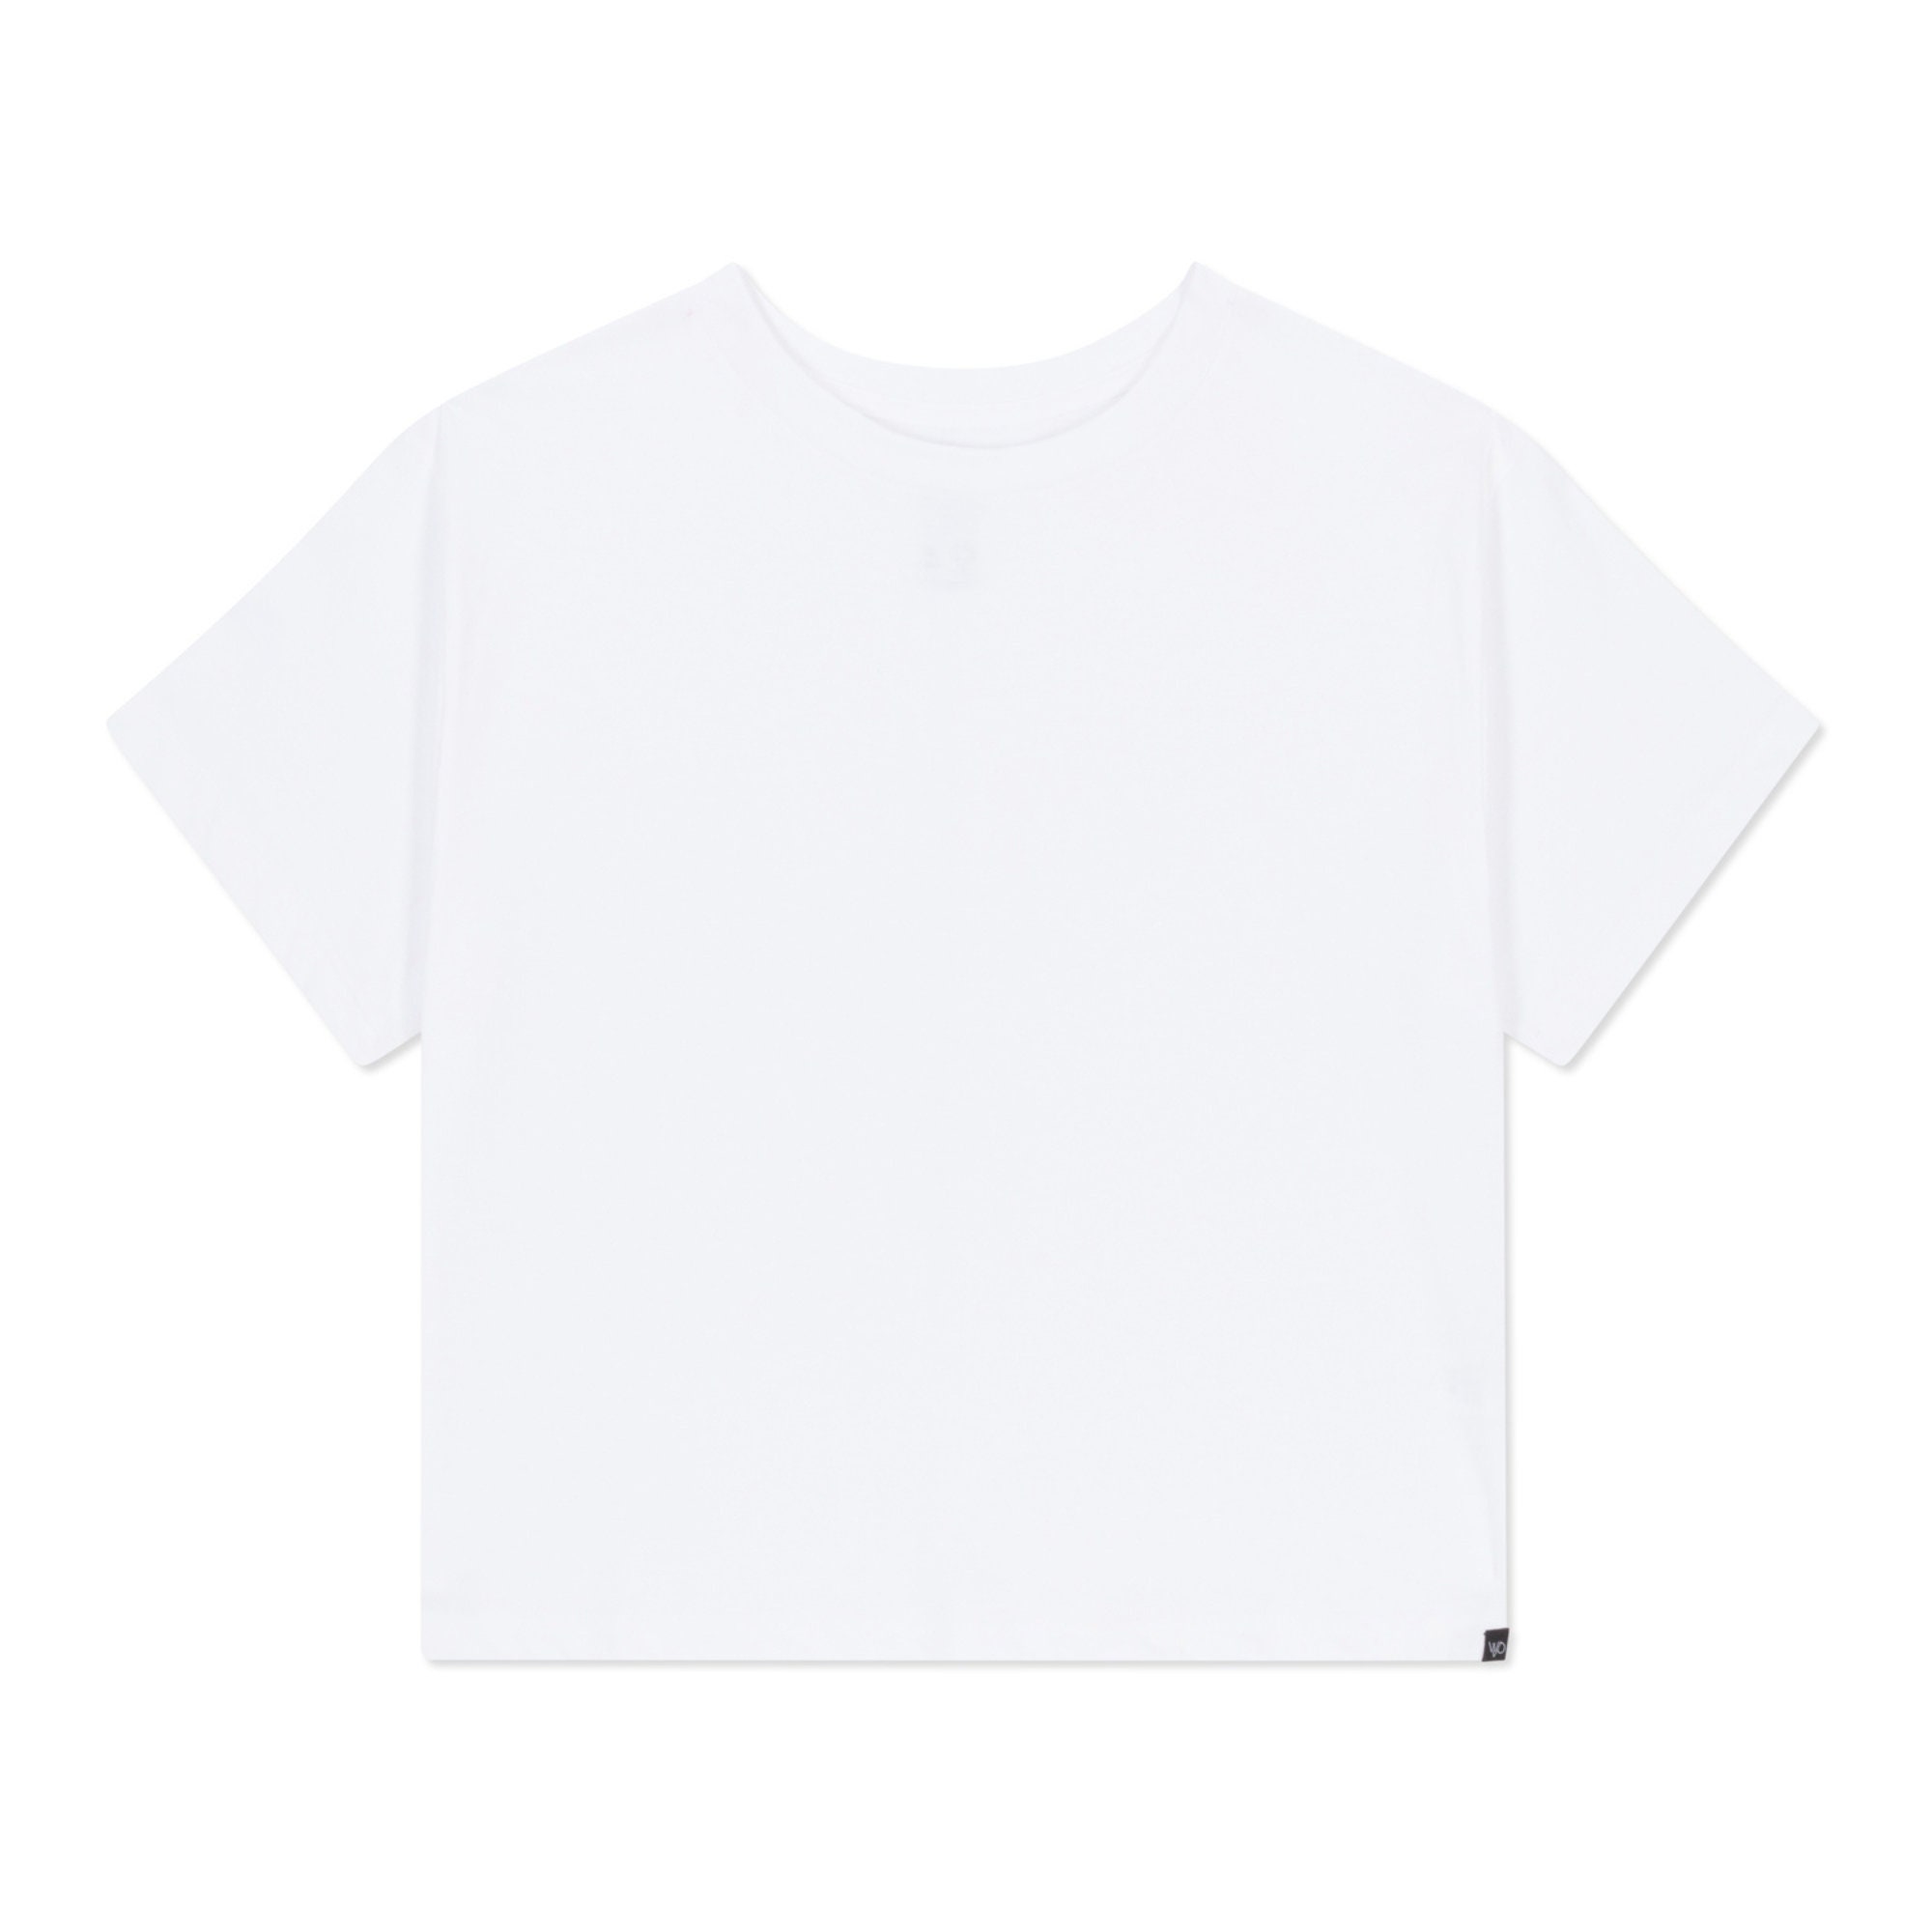 Boxy Tshirt White, 100% Cotton Tee Women's Plain White Shirt GOTS Organic  Crop Top Women's Basic T Shirt Fair Trade T-shirt Boxy Tee - Etsy